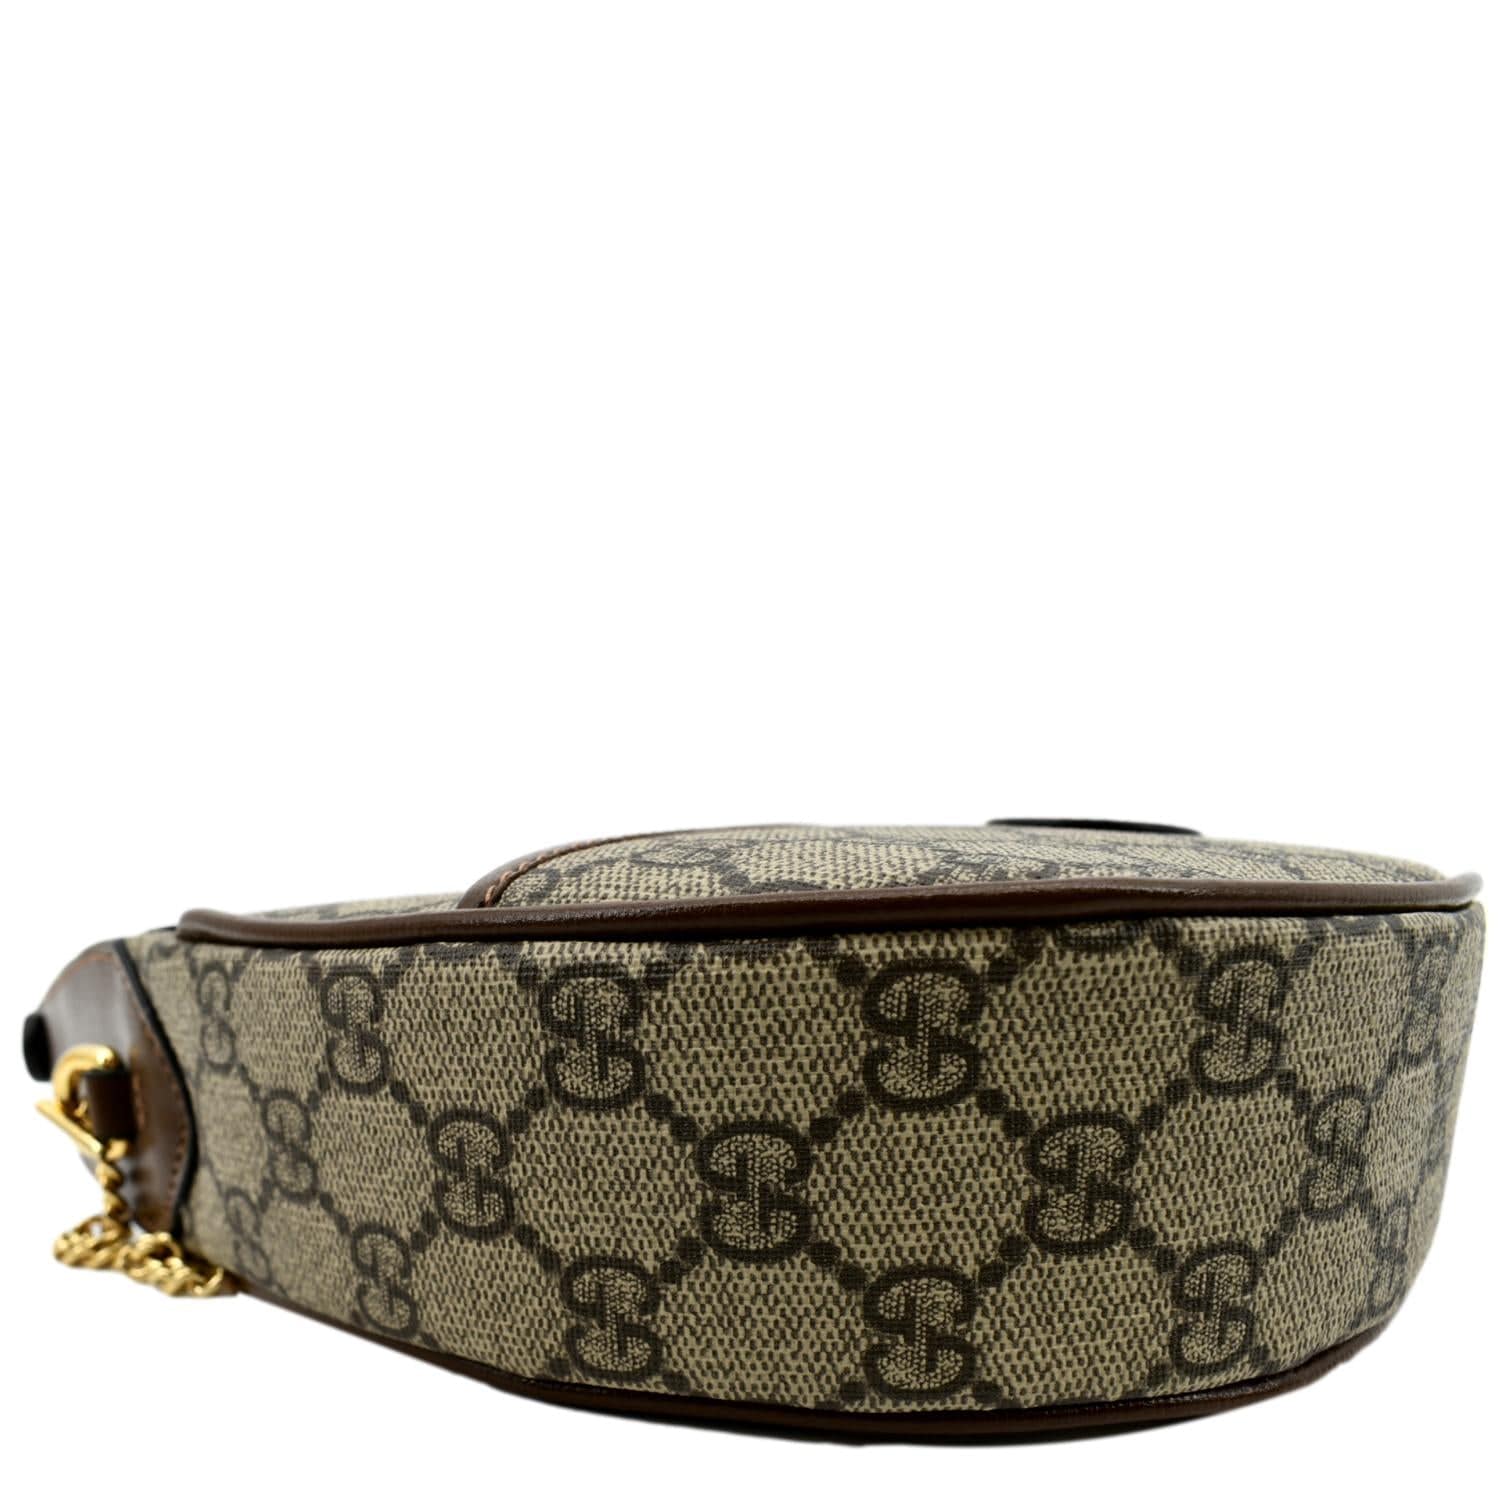 Louis Vuitton Half-Moon Mini Bag now on SALE ✨✨🎉 GET IT NOW FOR